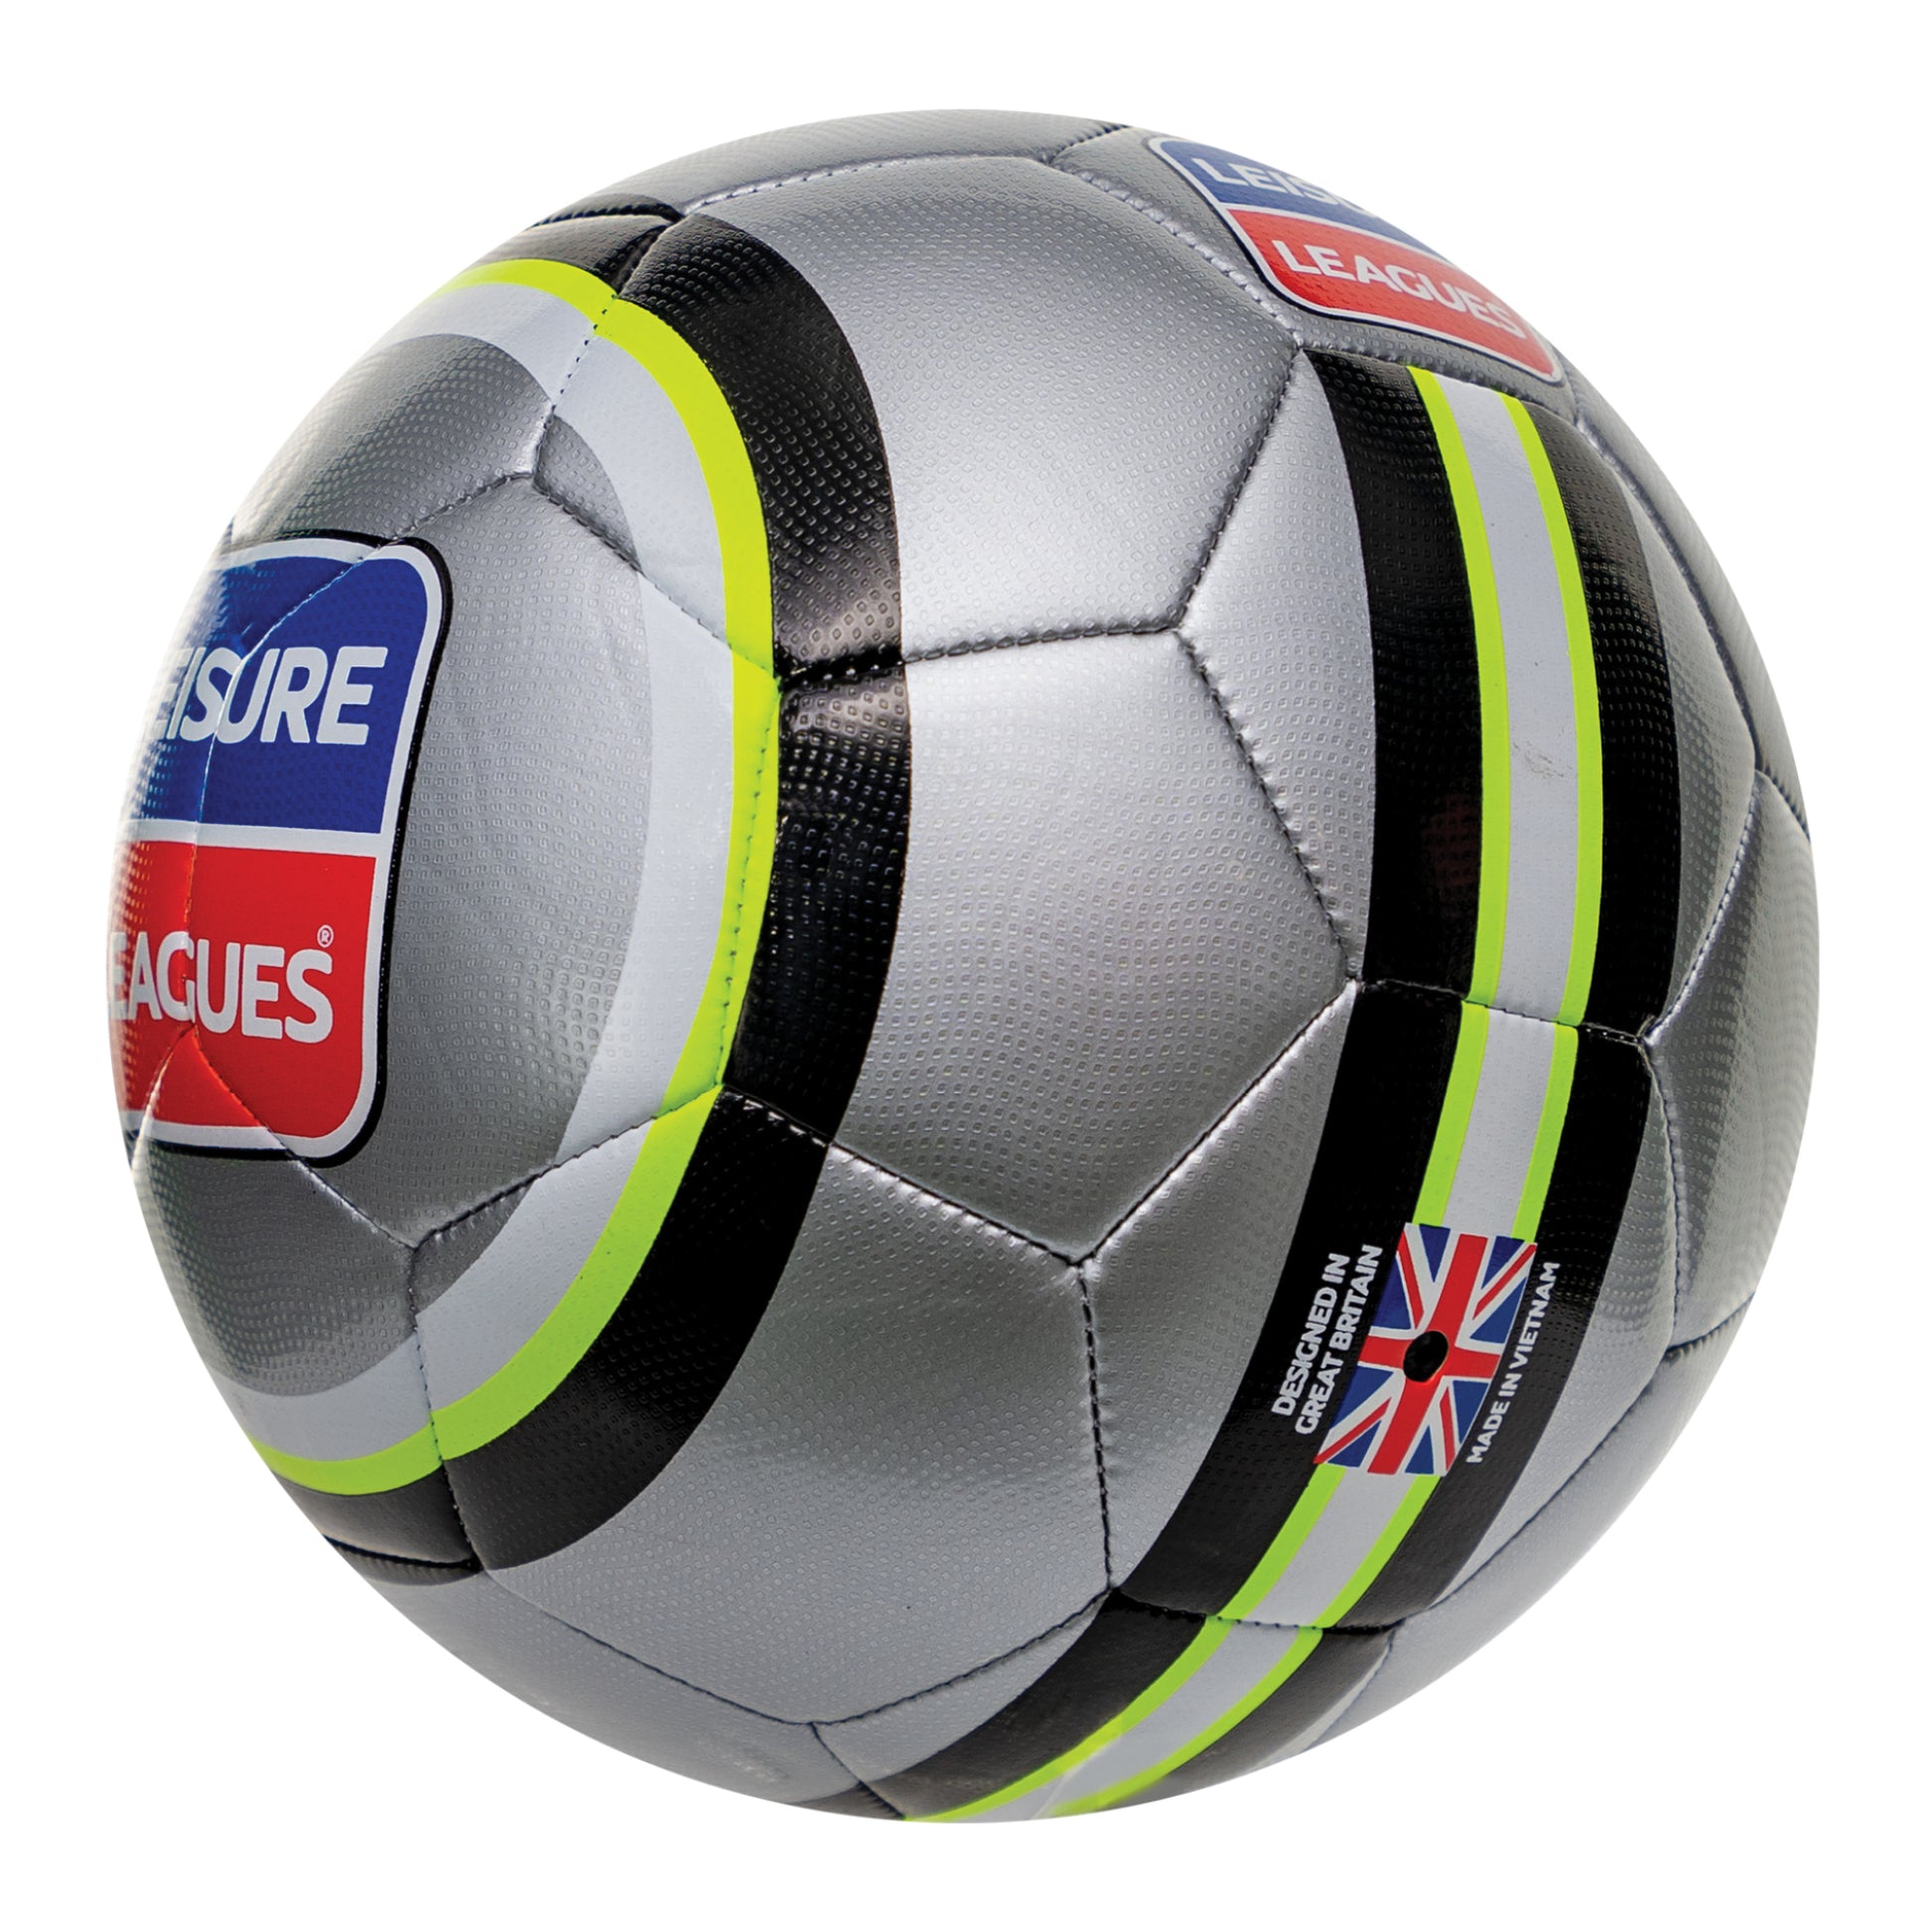 Leisure leagues football Size 5 Ball Silver